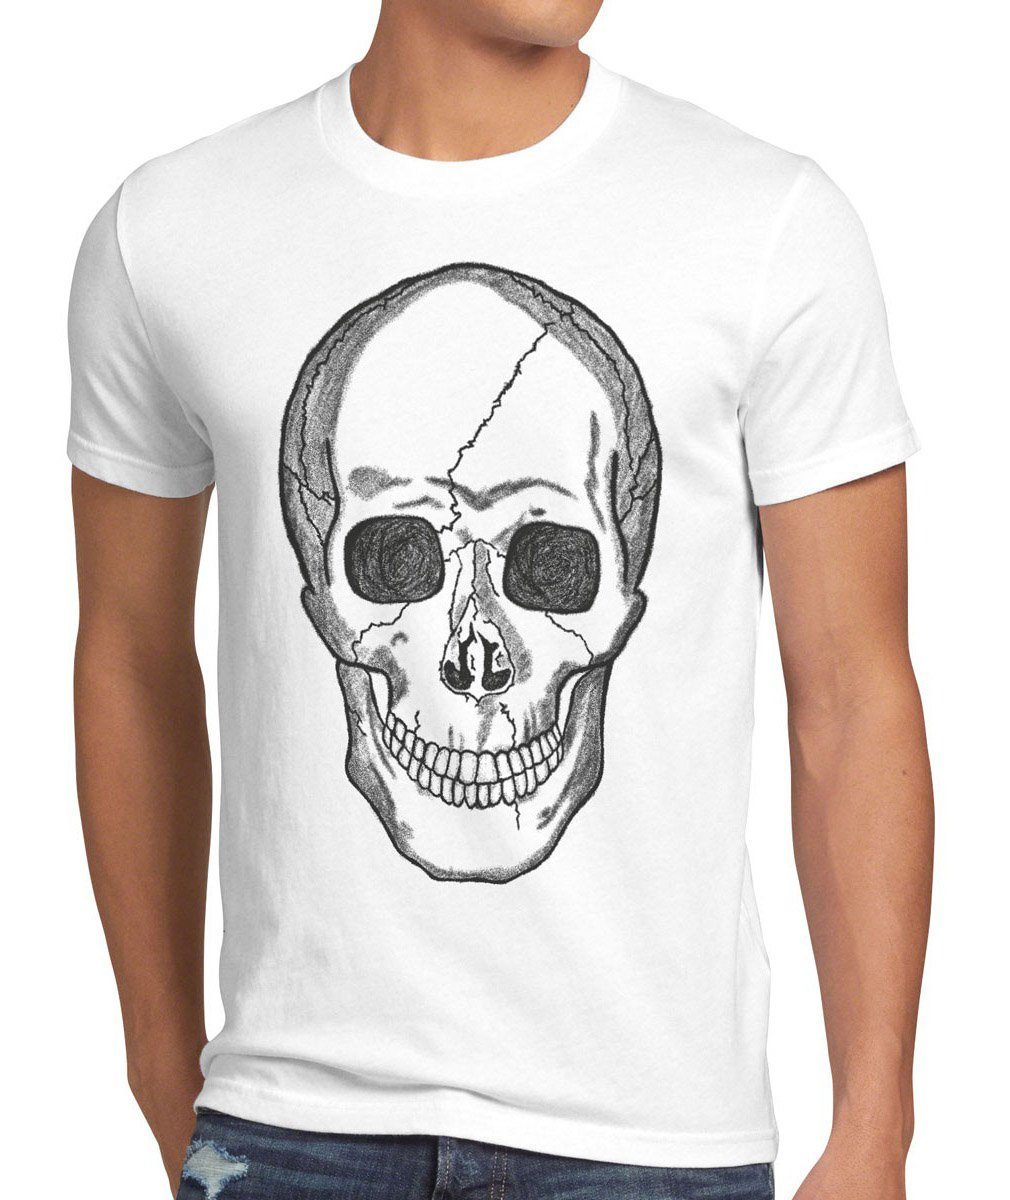 Rocker Tattoo Totenkopf style3 Punk Herren knochen Skull us T-Shirt biker Print-Shirt weiß gothic Harley